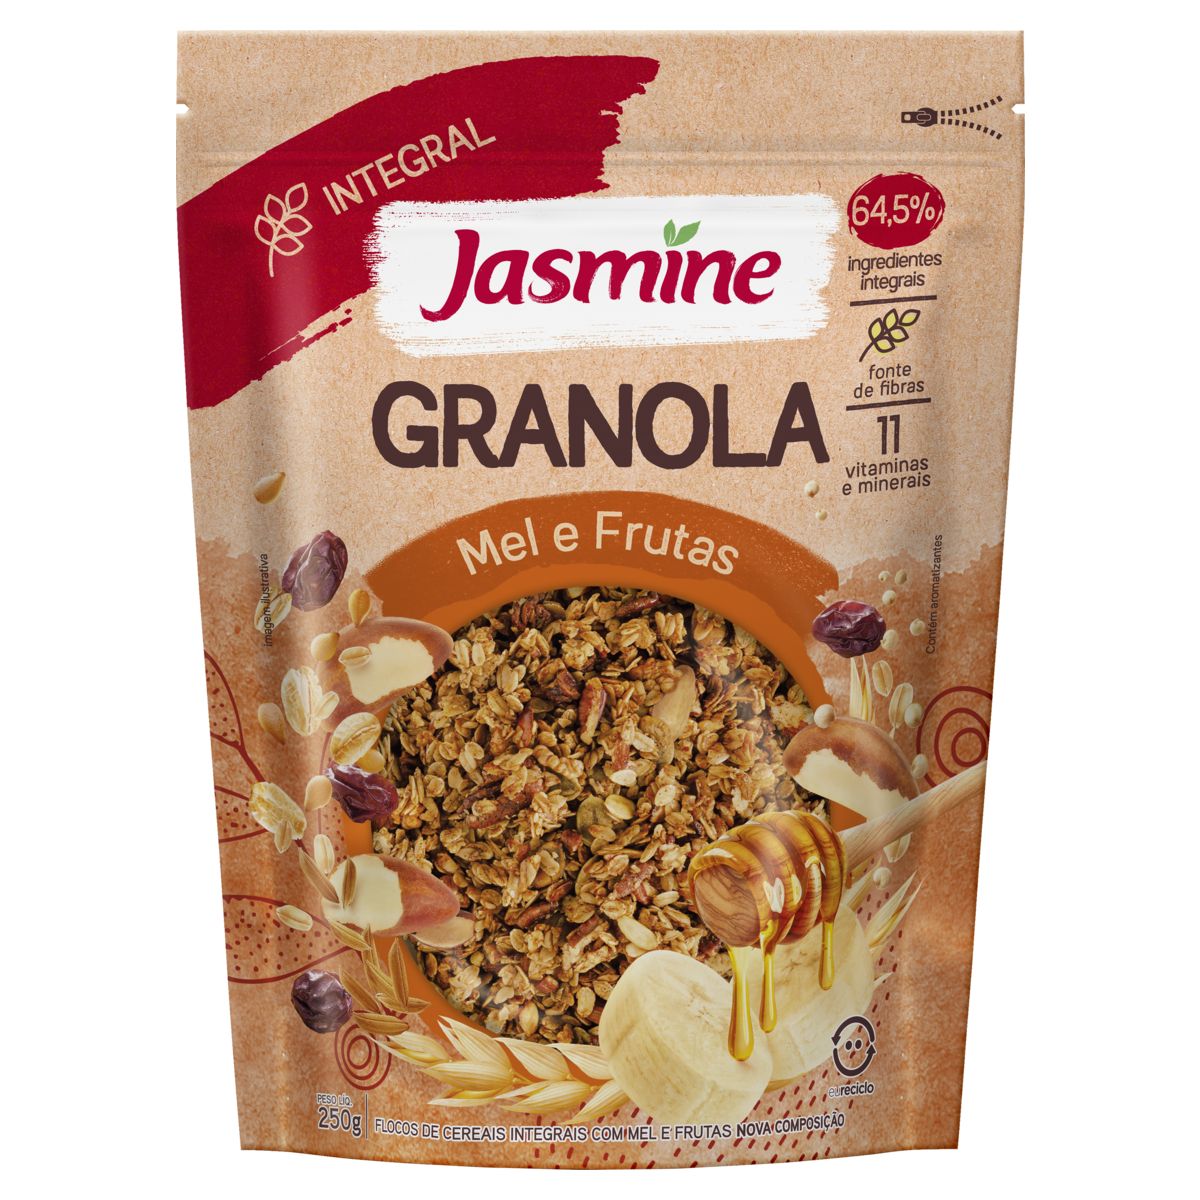 Granola Jasmine Mel e Frutas 64,5% Integral Pouch 250g